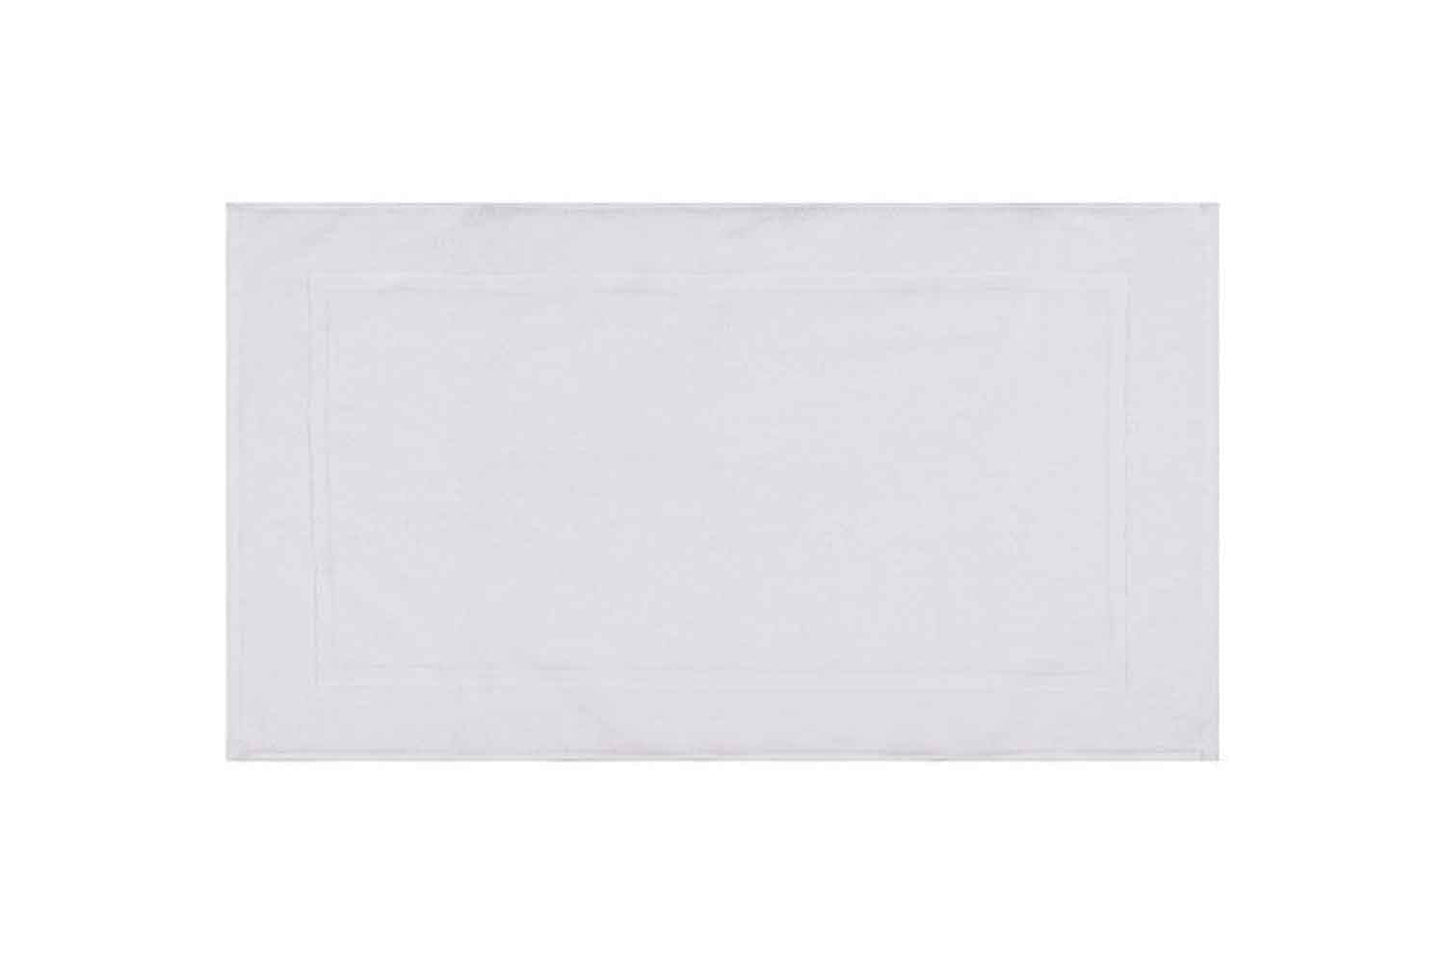 22x34 inch Marbella White Hotel Towel | Tub Mat with Vertical Bar Accent Dobby - American Dawn